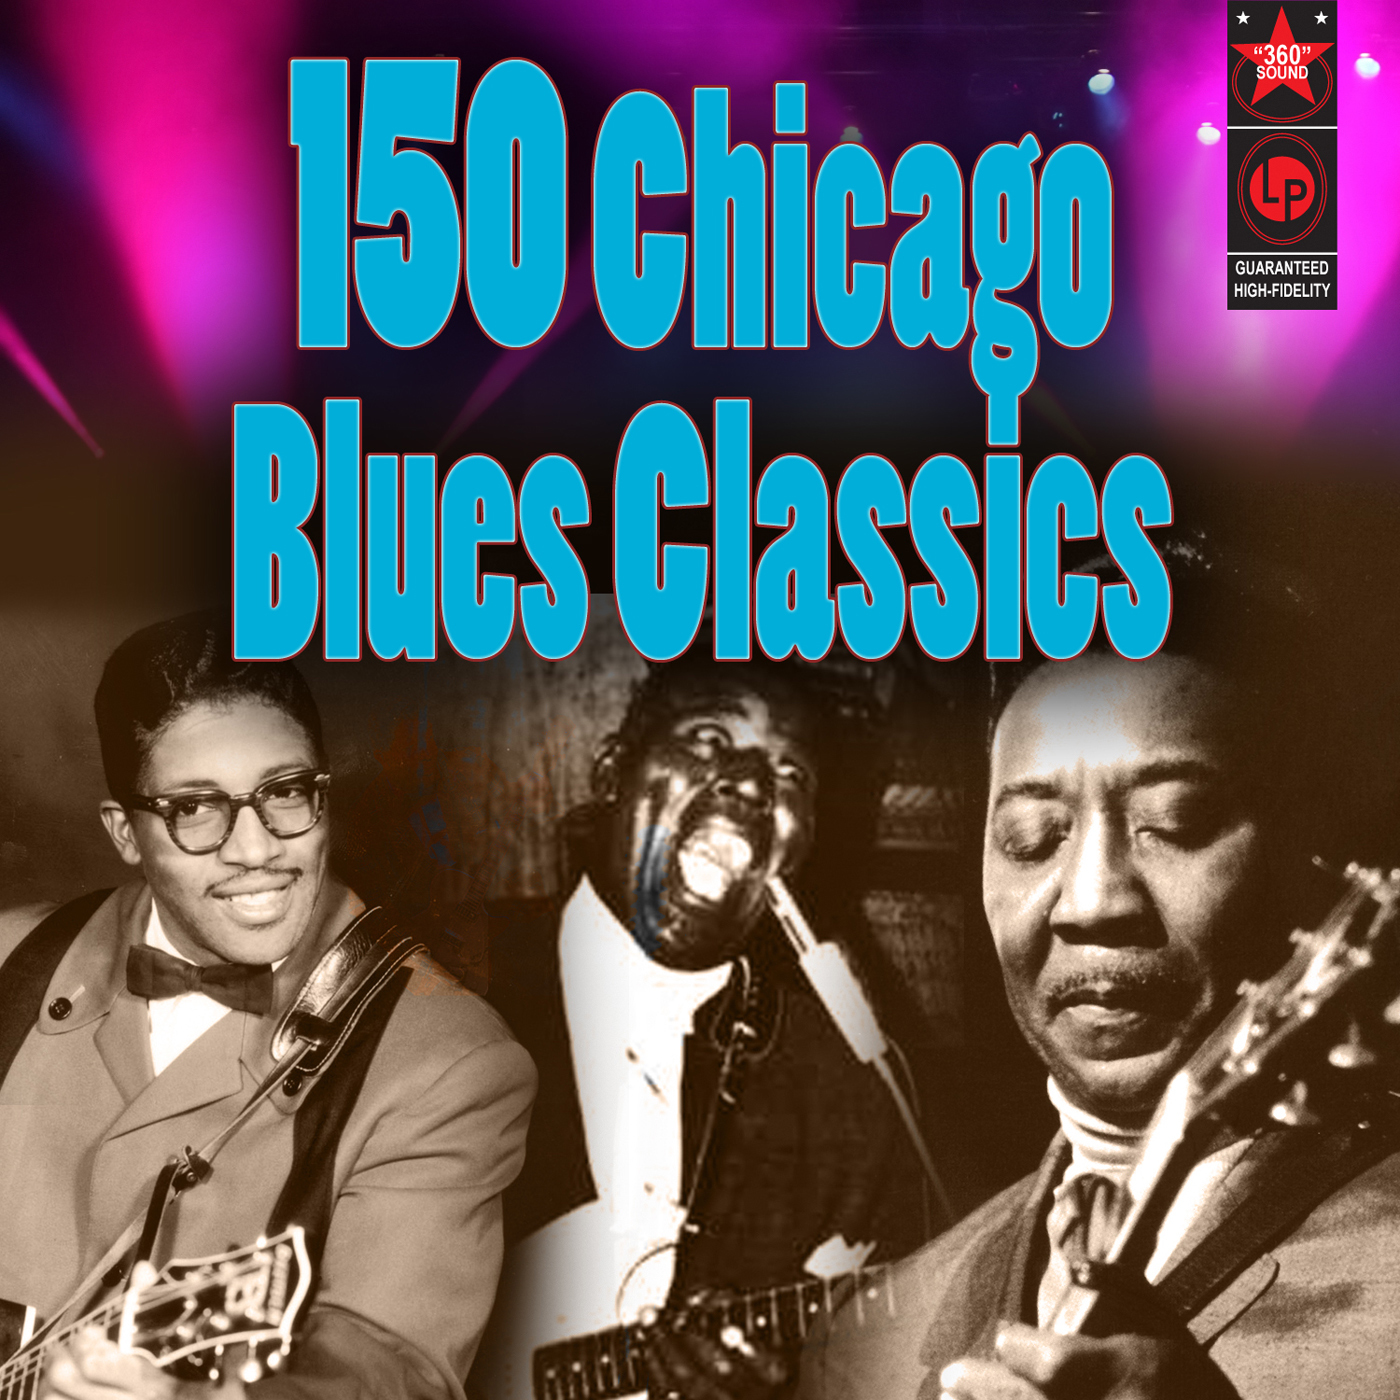 150 Chicago Blues Classics